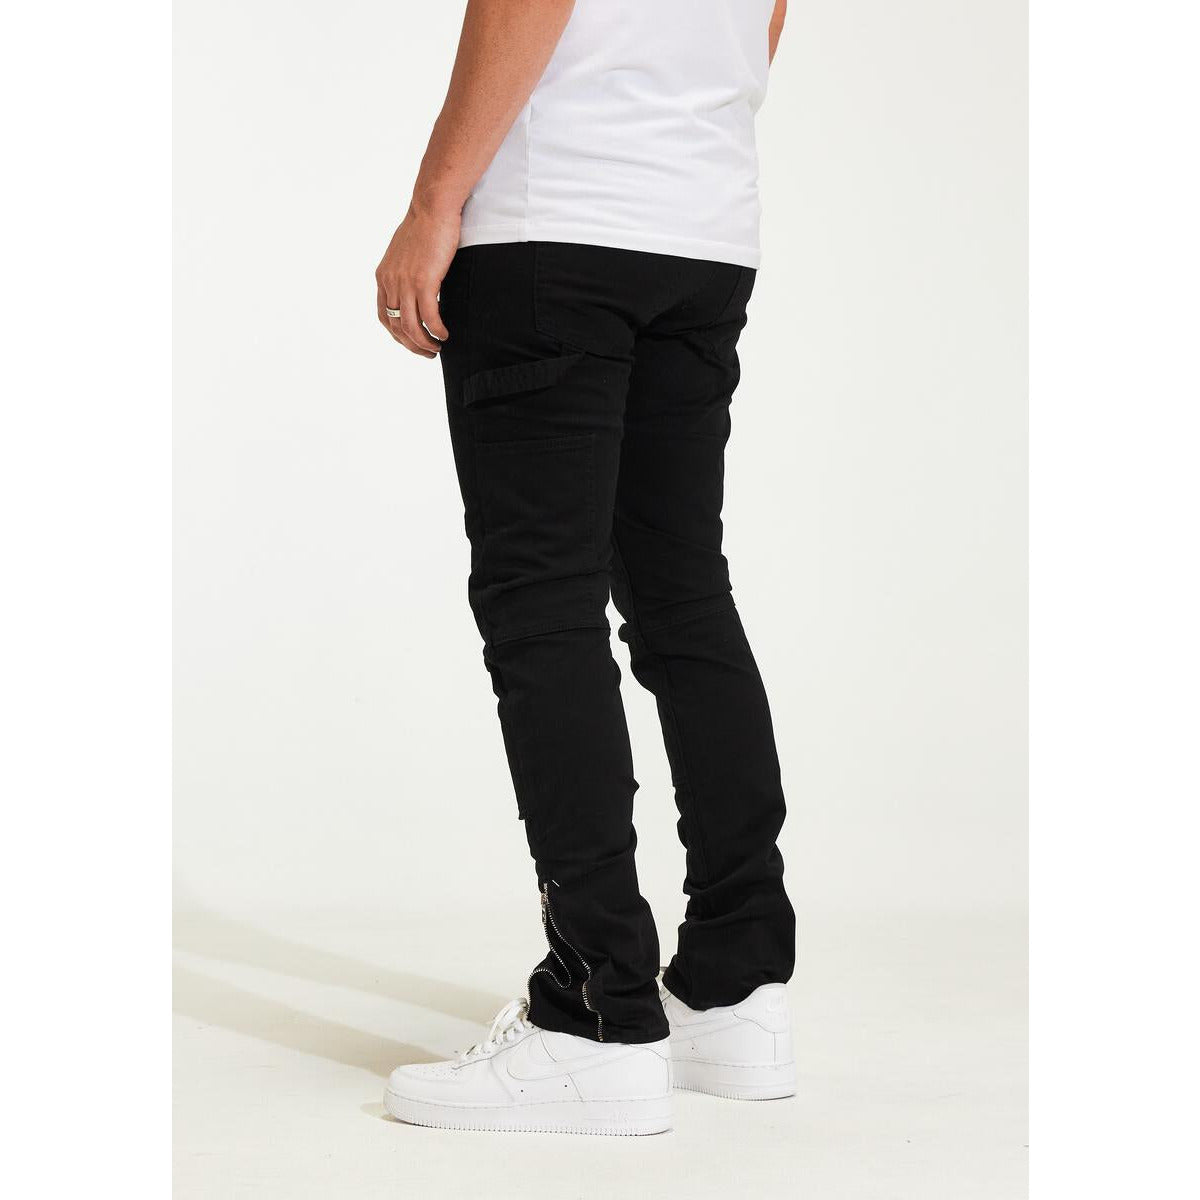 Crysp Denim Smith Pant Black Ripped Jeans (CRYH22-205)